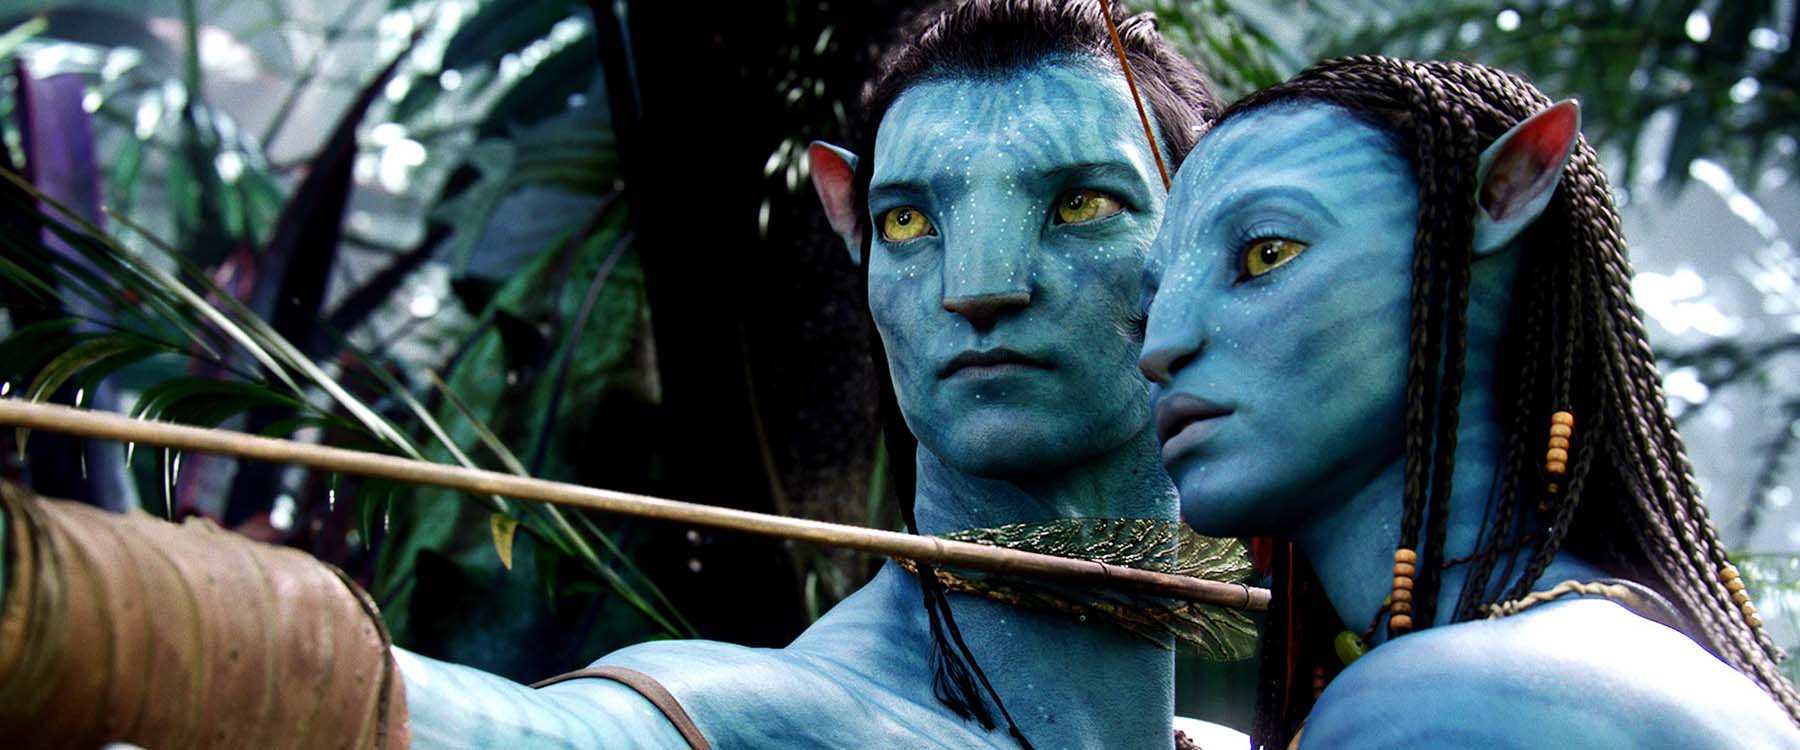 Avatar in IMAX 3D